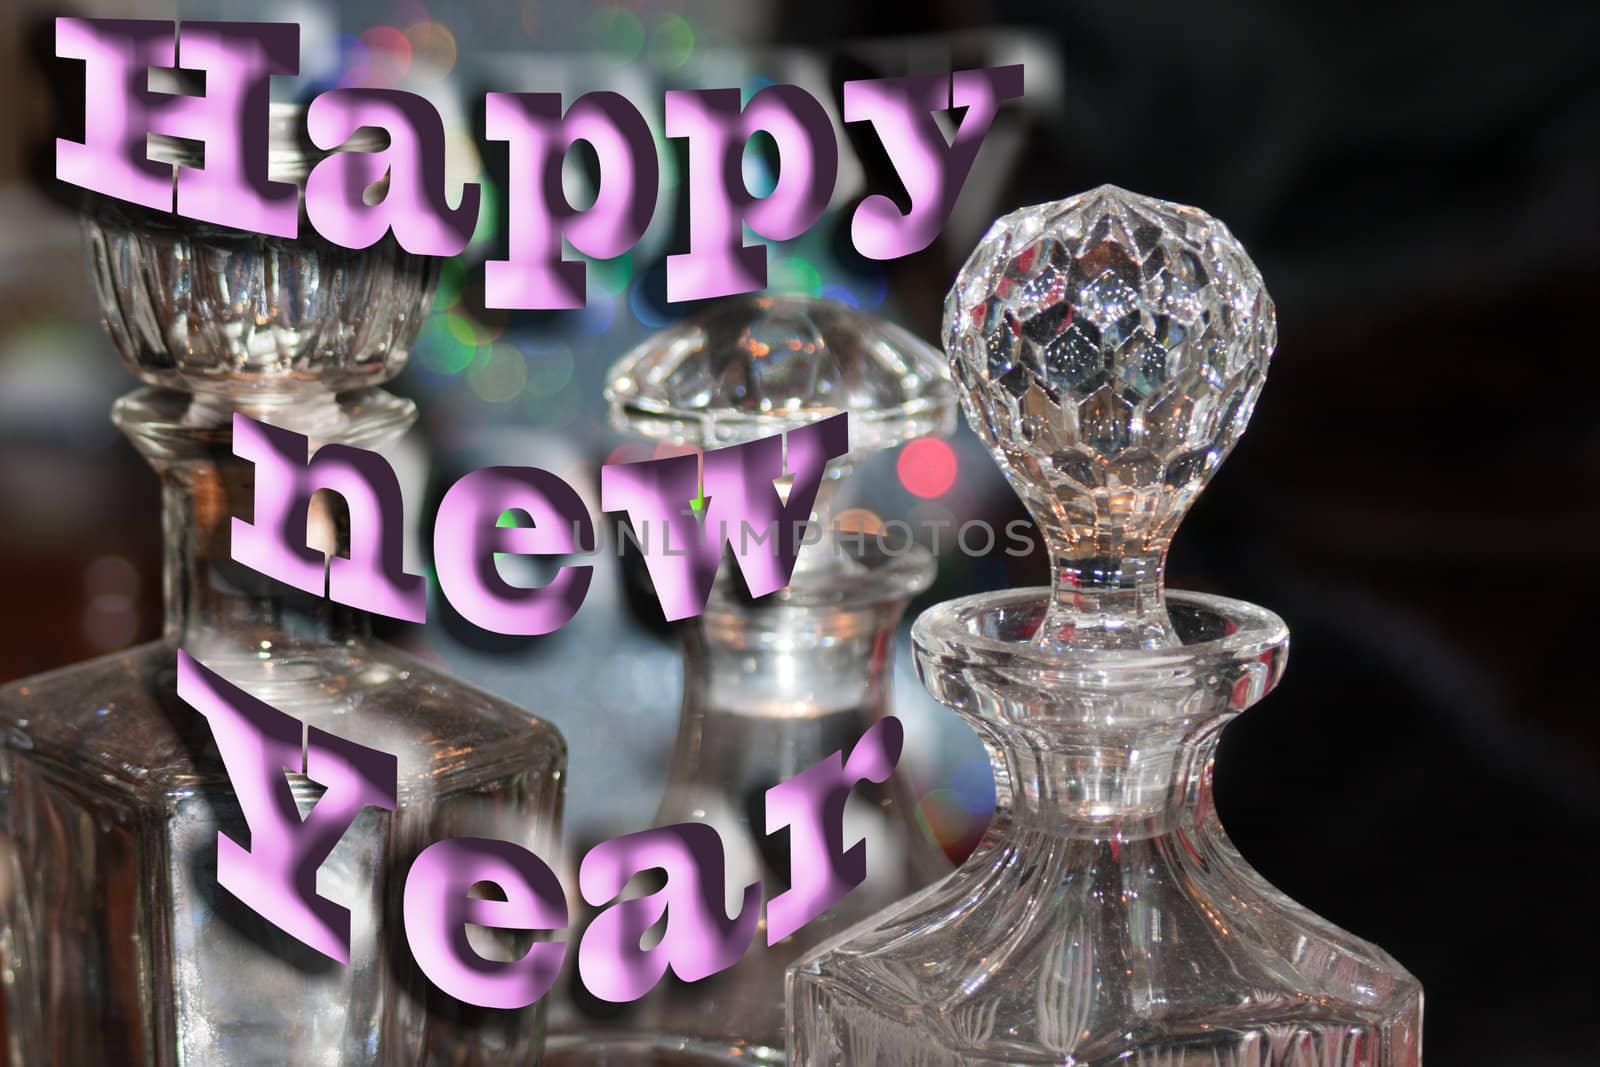 Whiskey bottles with happy new year text by GunterNezhoda